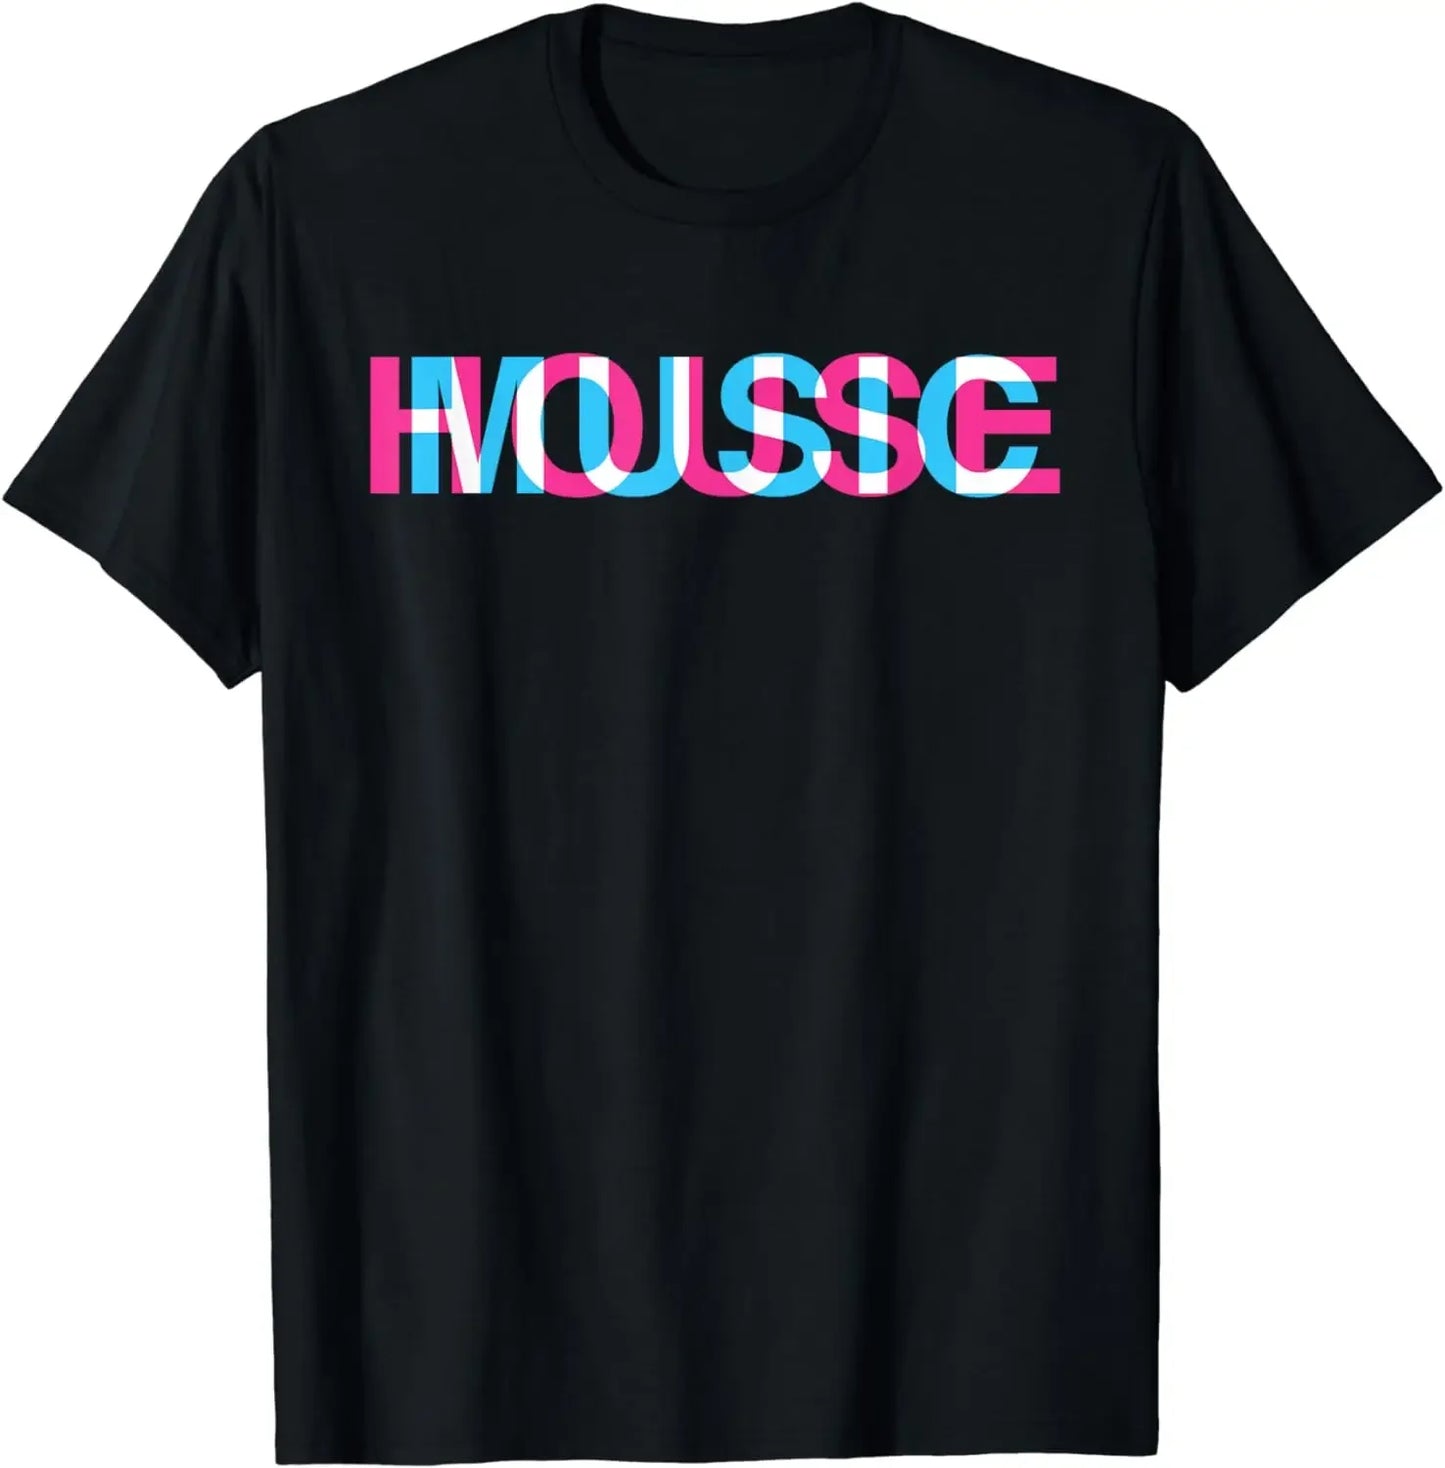 Graphic T Shirts Shirts for Men Tops Camisas House Music Glitch Optical Illusion - EDM Rave DJ T-Shirt oversized t shirt BLACK